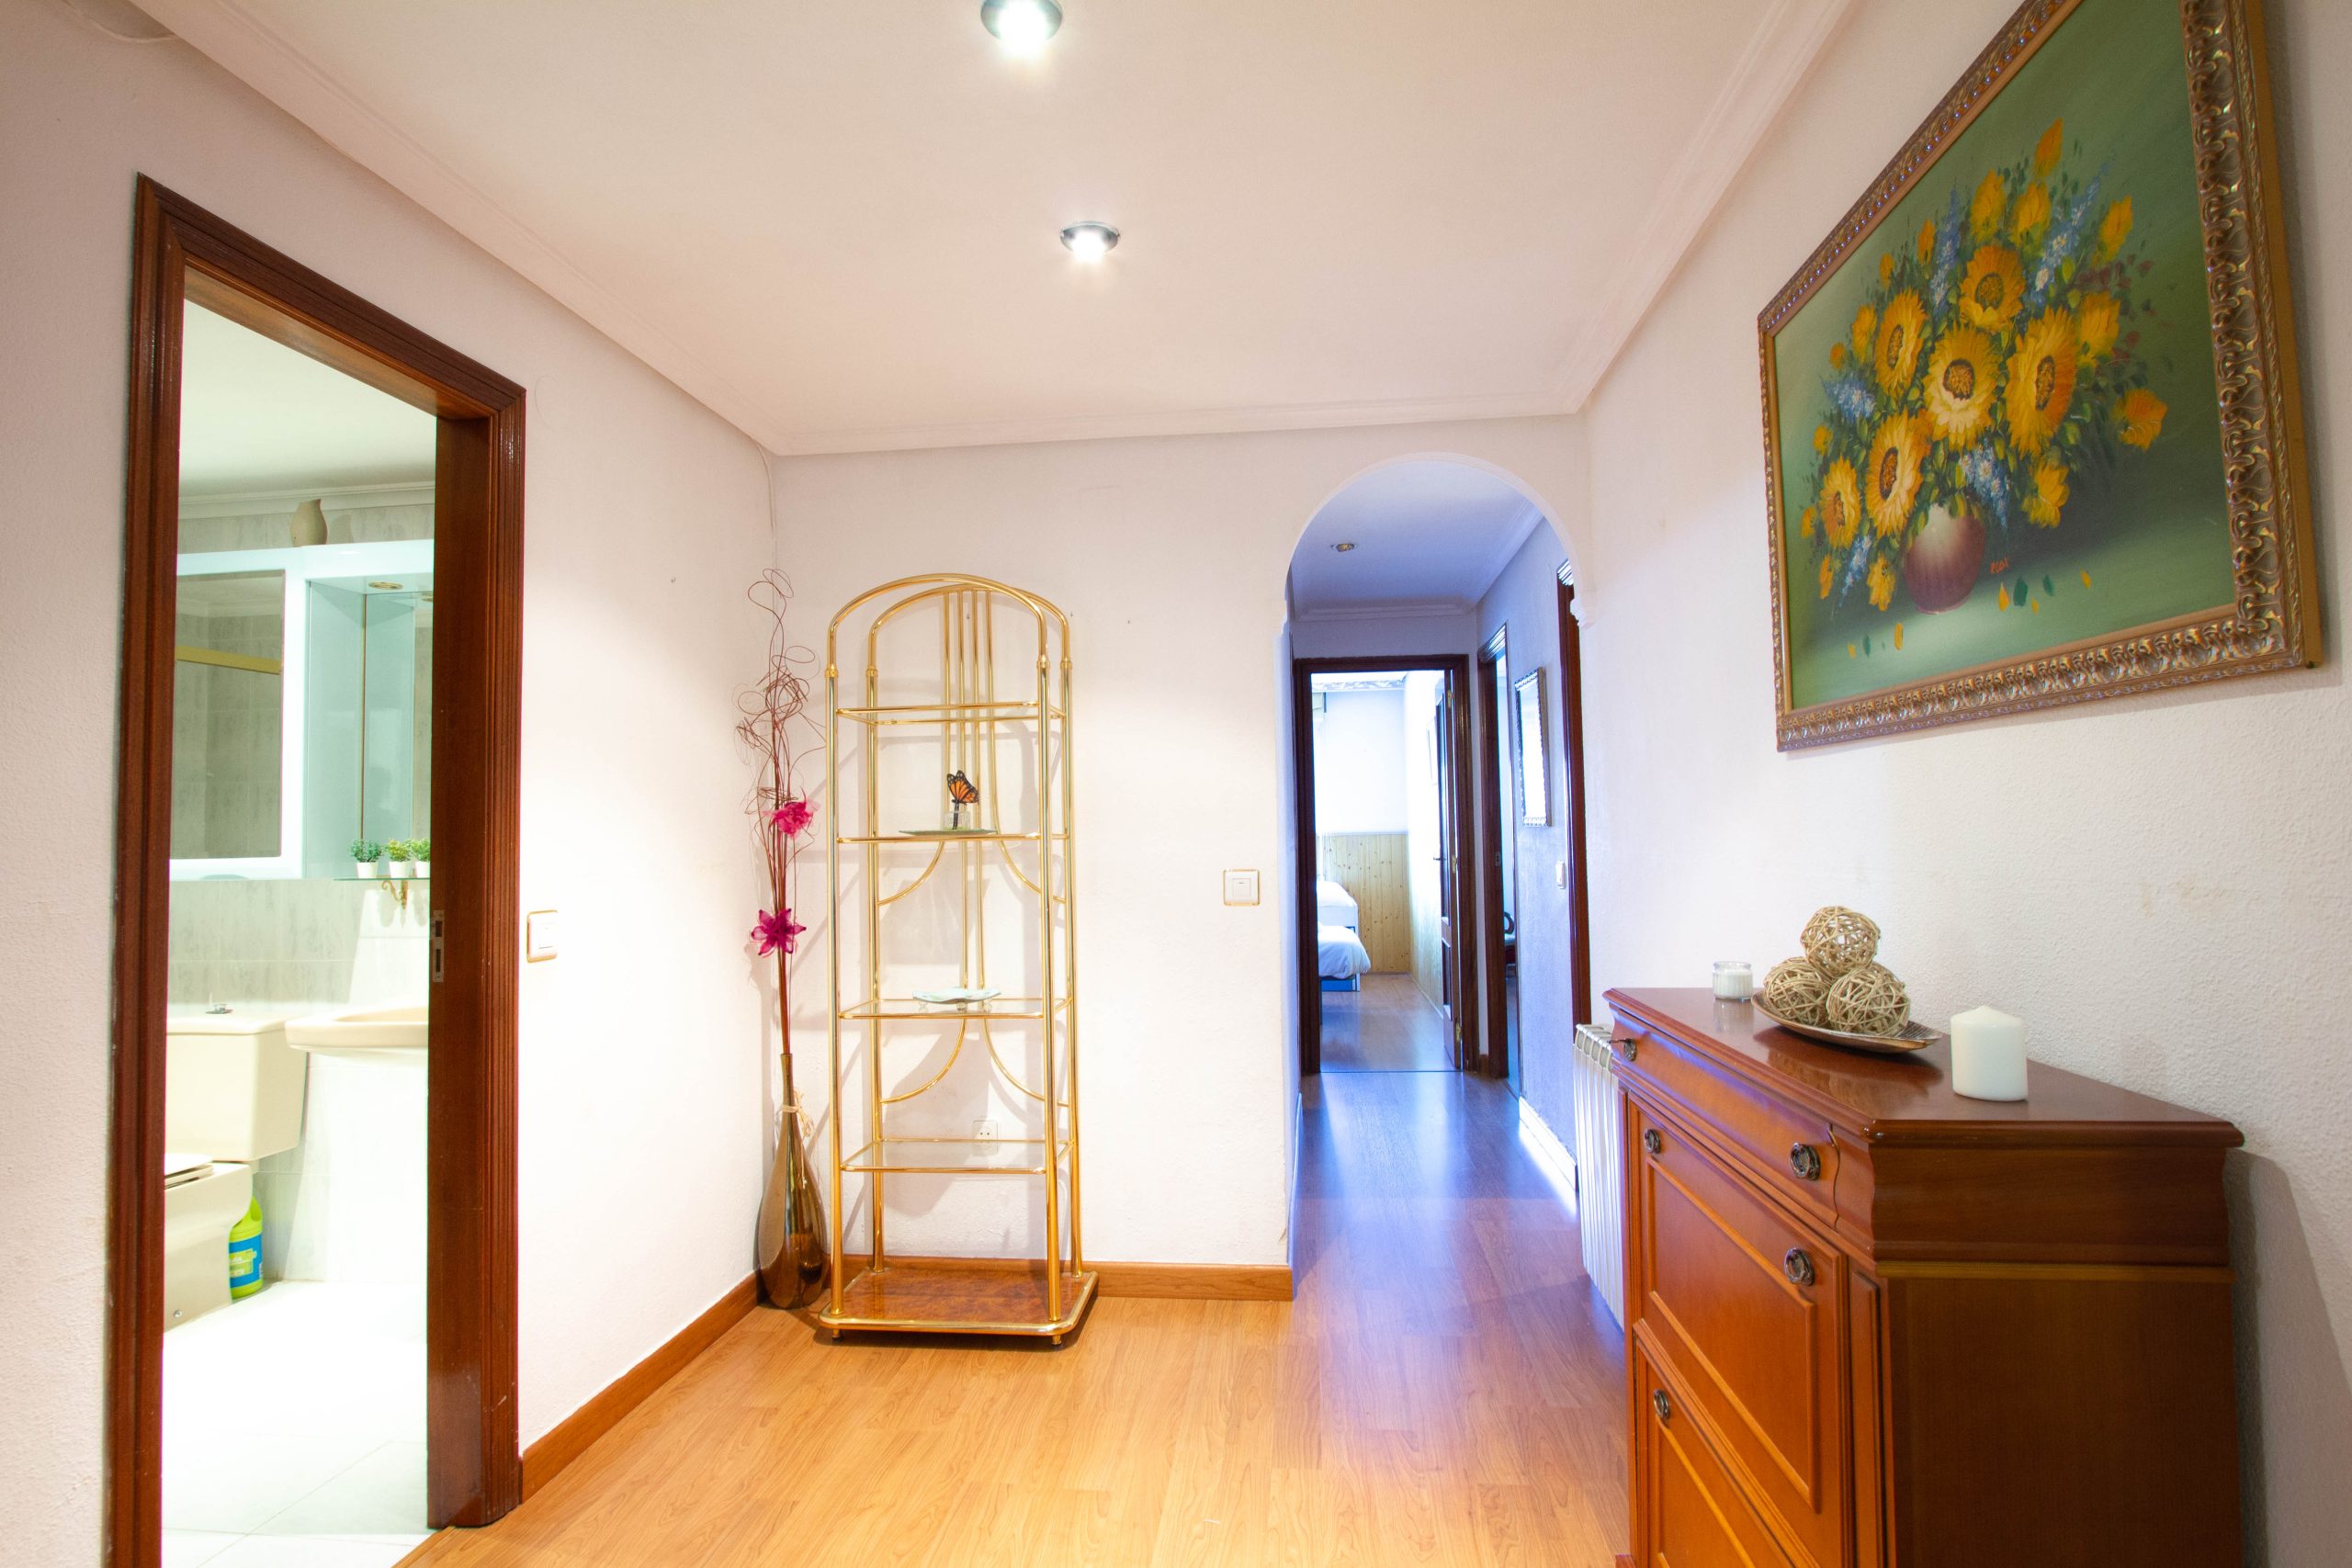 Zelanda - Furnished apartment for rent in Salamanca